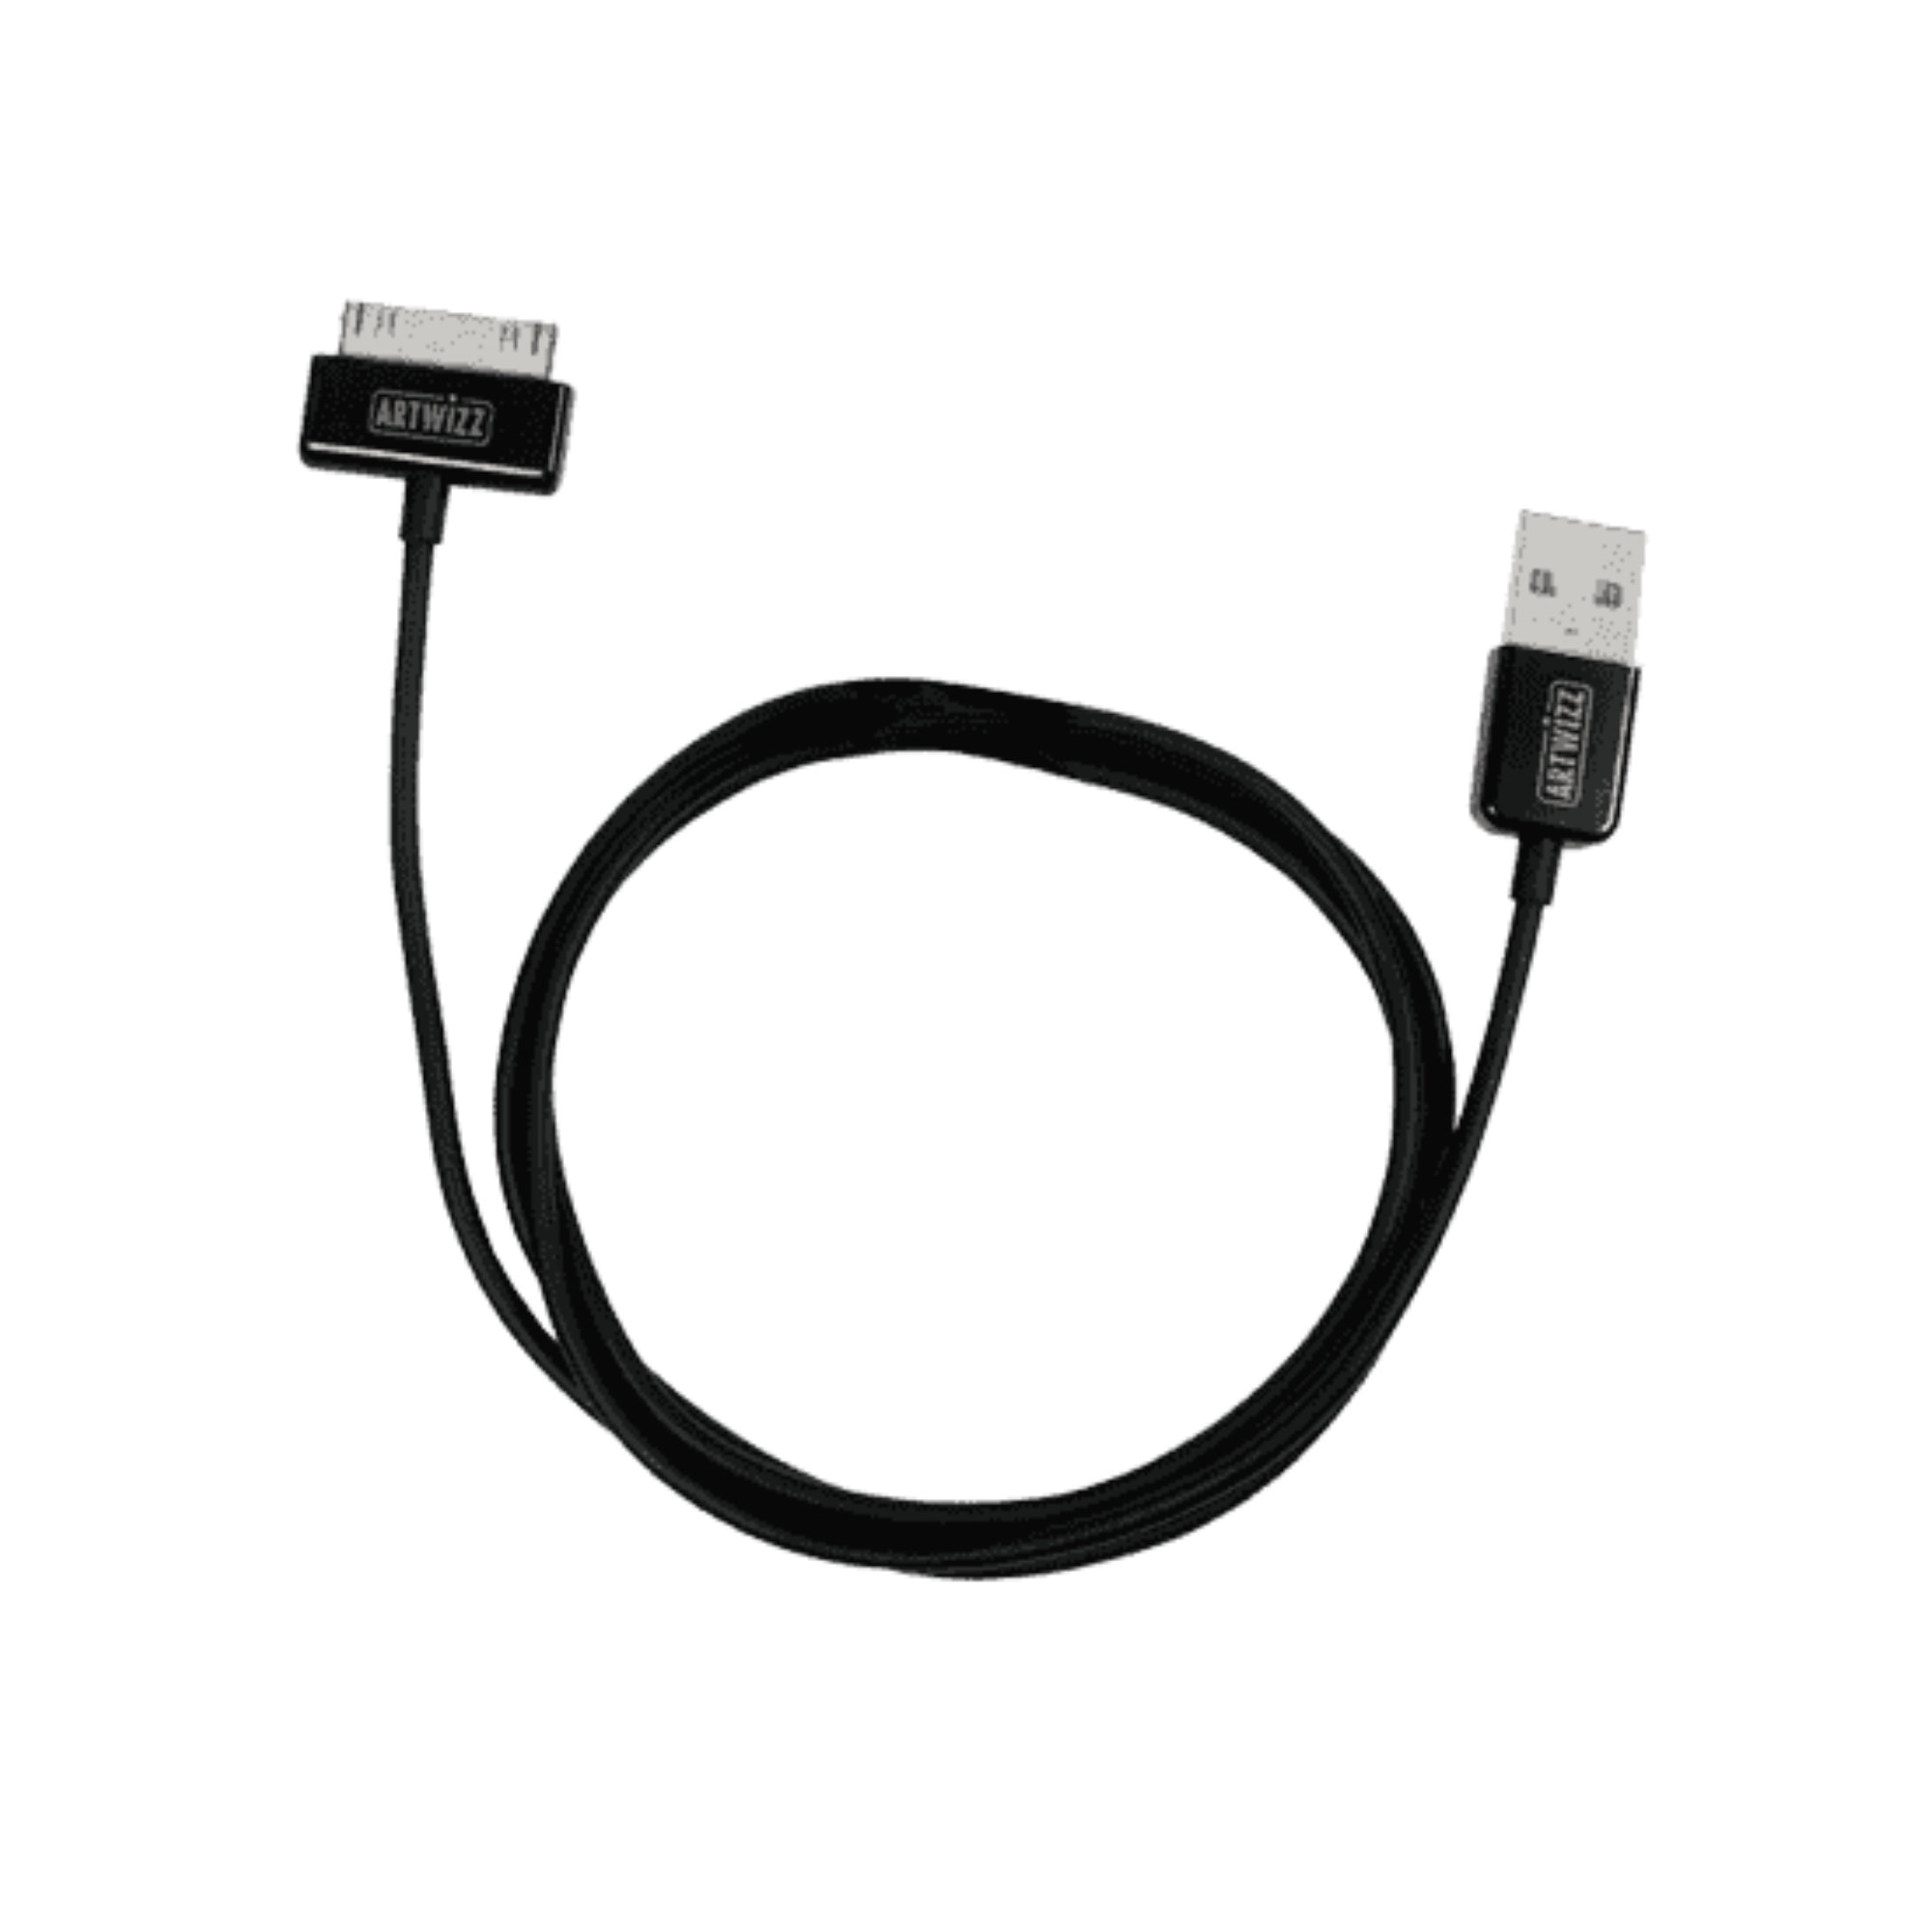 & iPod, ARTWIZZ Kabel mit Connector, USB Dock Pin 100 Schwarz iPad, cm, iPhone 30